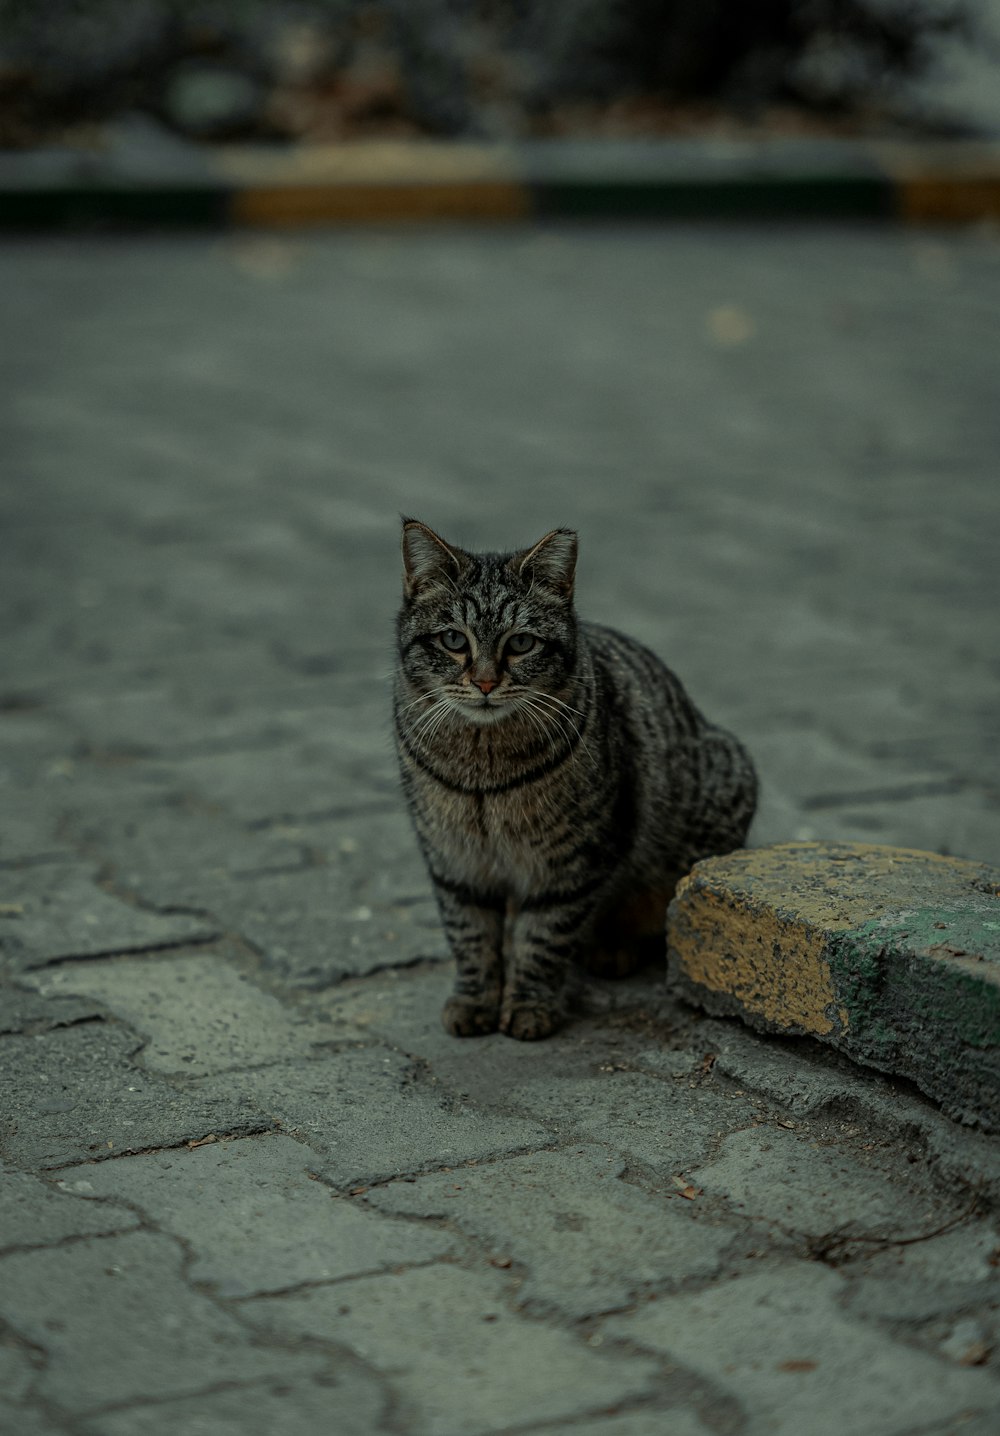 a cat is sitting on a cobblestone street